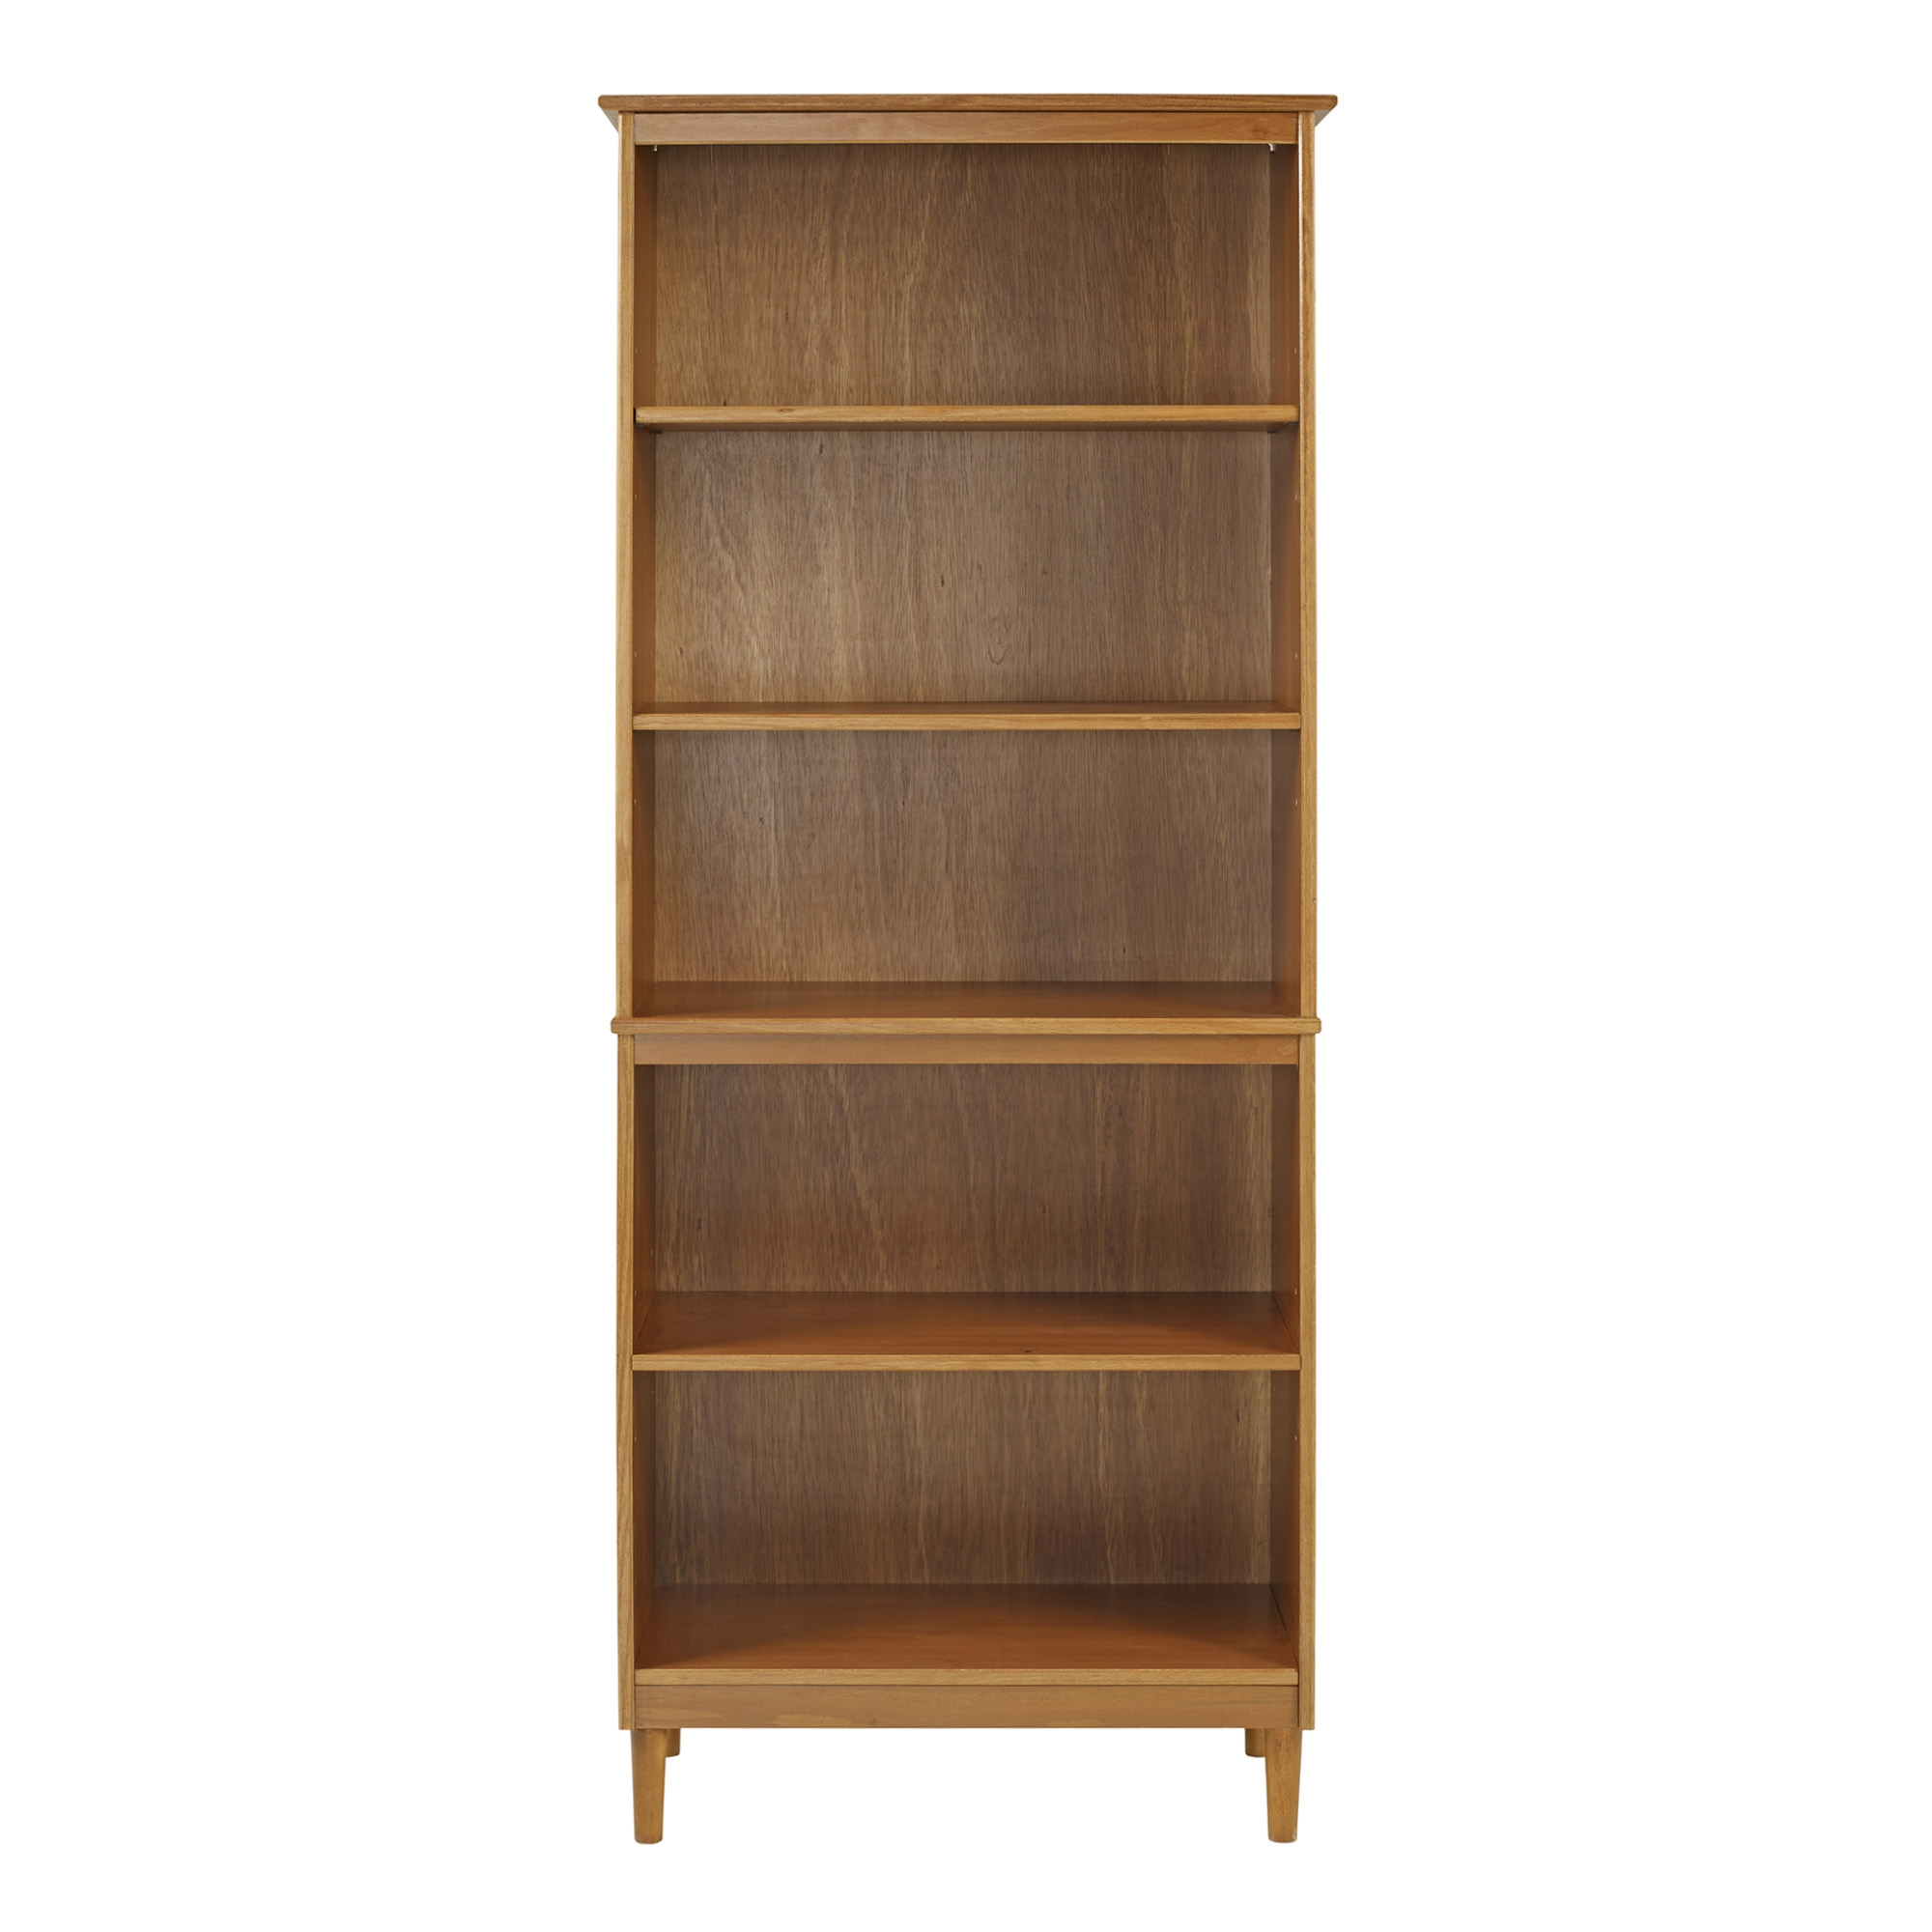 Spencer Wood Bookcase, Caramel - Image 1